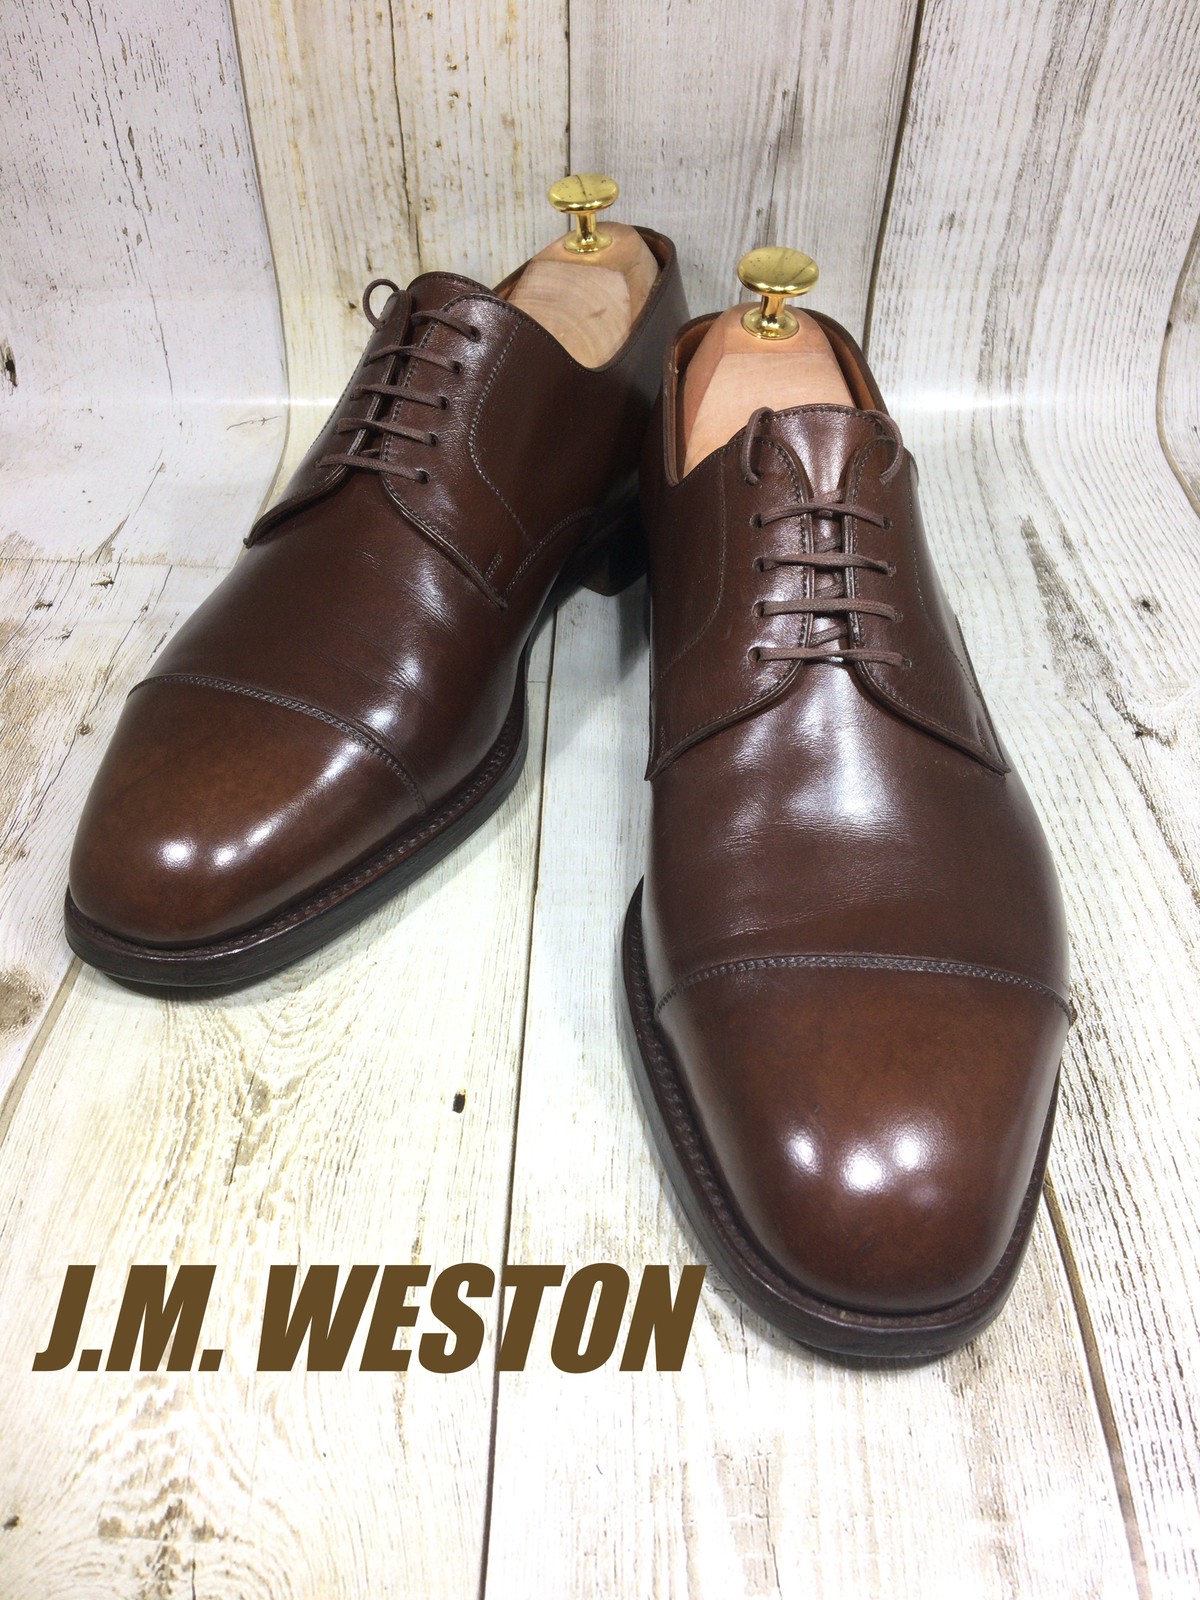 JM Weston ジェイエムウエストン ストレートチップ 500 UK8H 27cm | 中古靴・革靴・ブーツ通販専門店 DafsMart